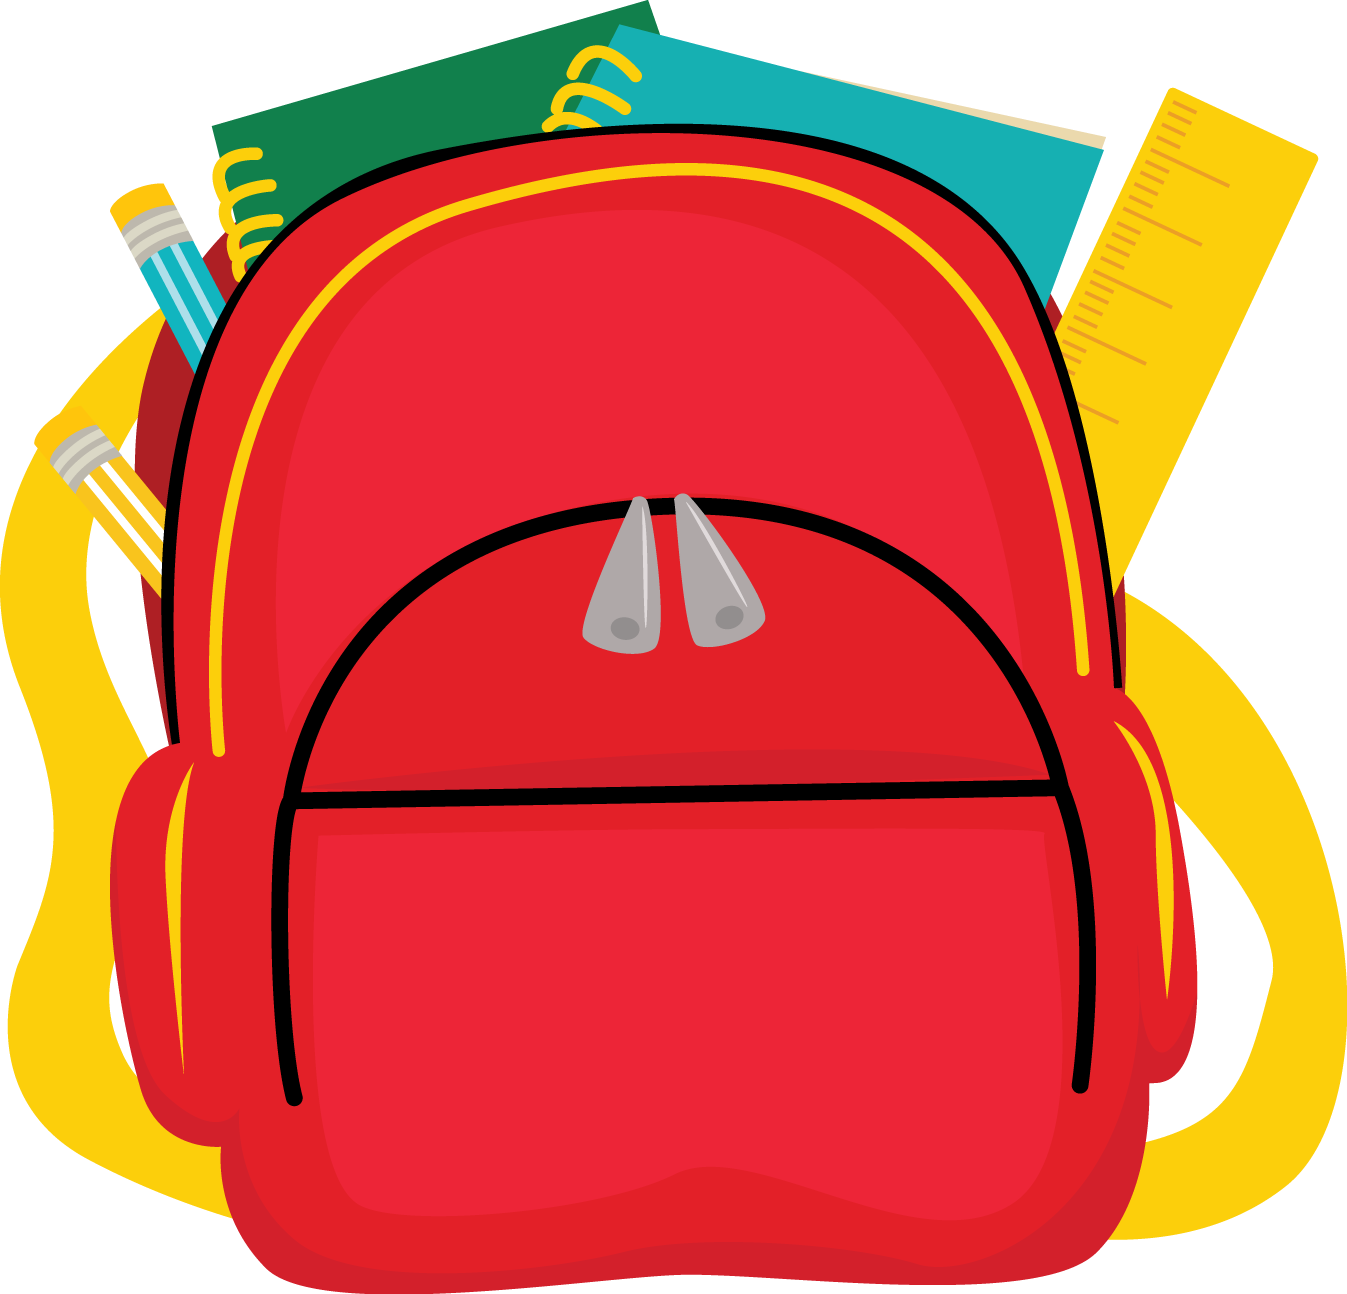 School Bag Backpack Clip art - school png download - 1347*1294 - Free ...